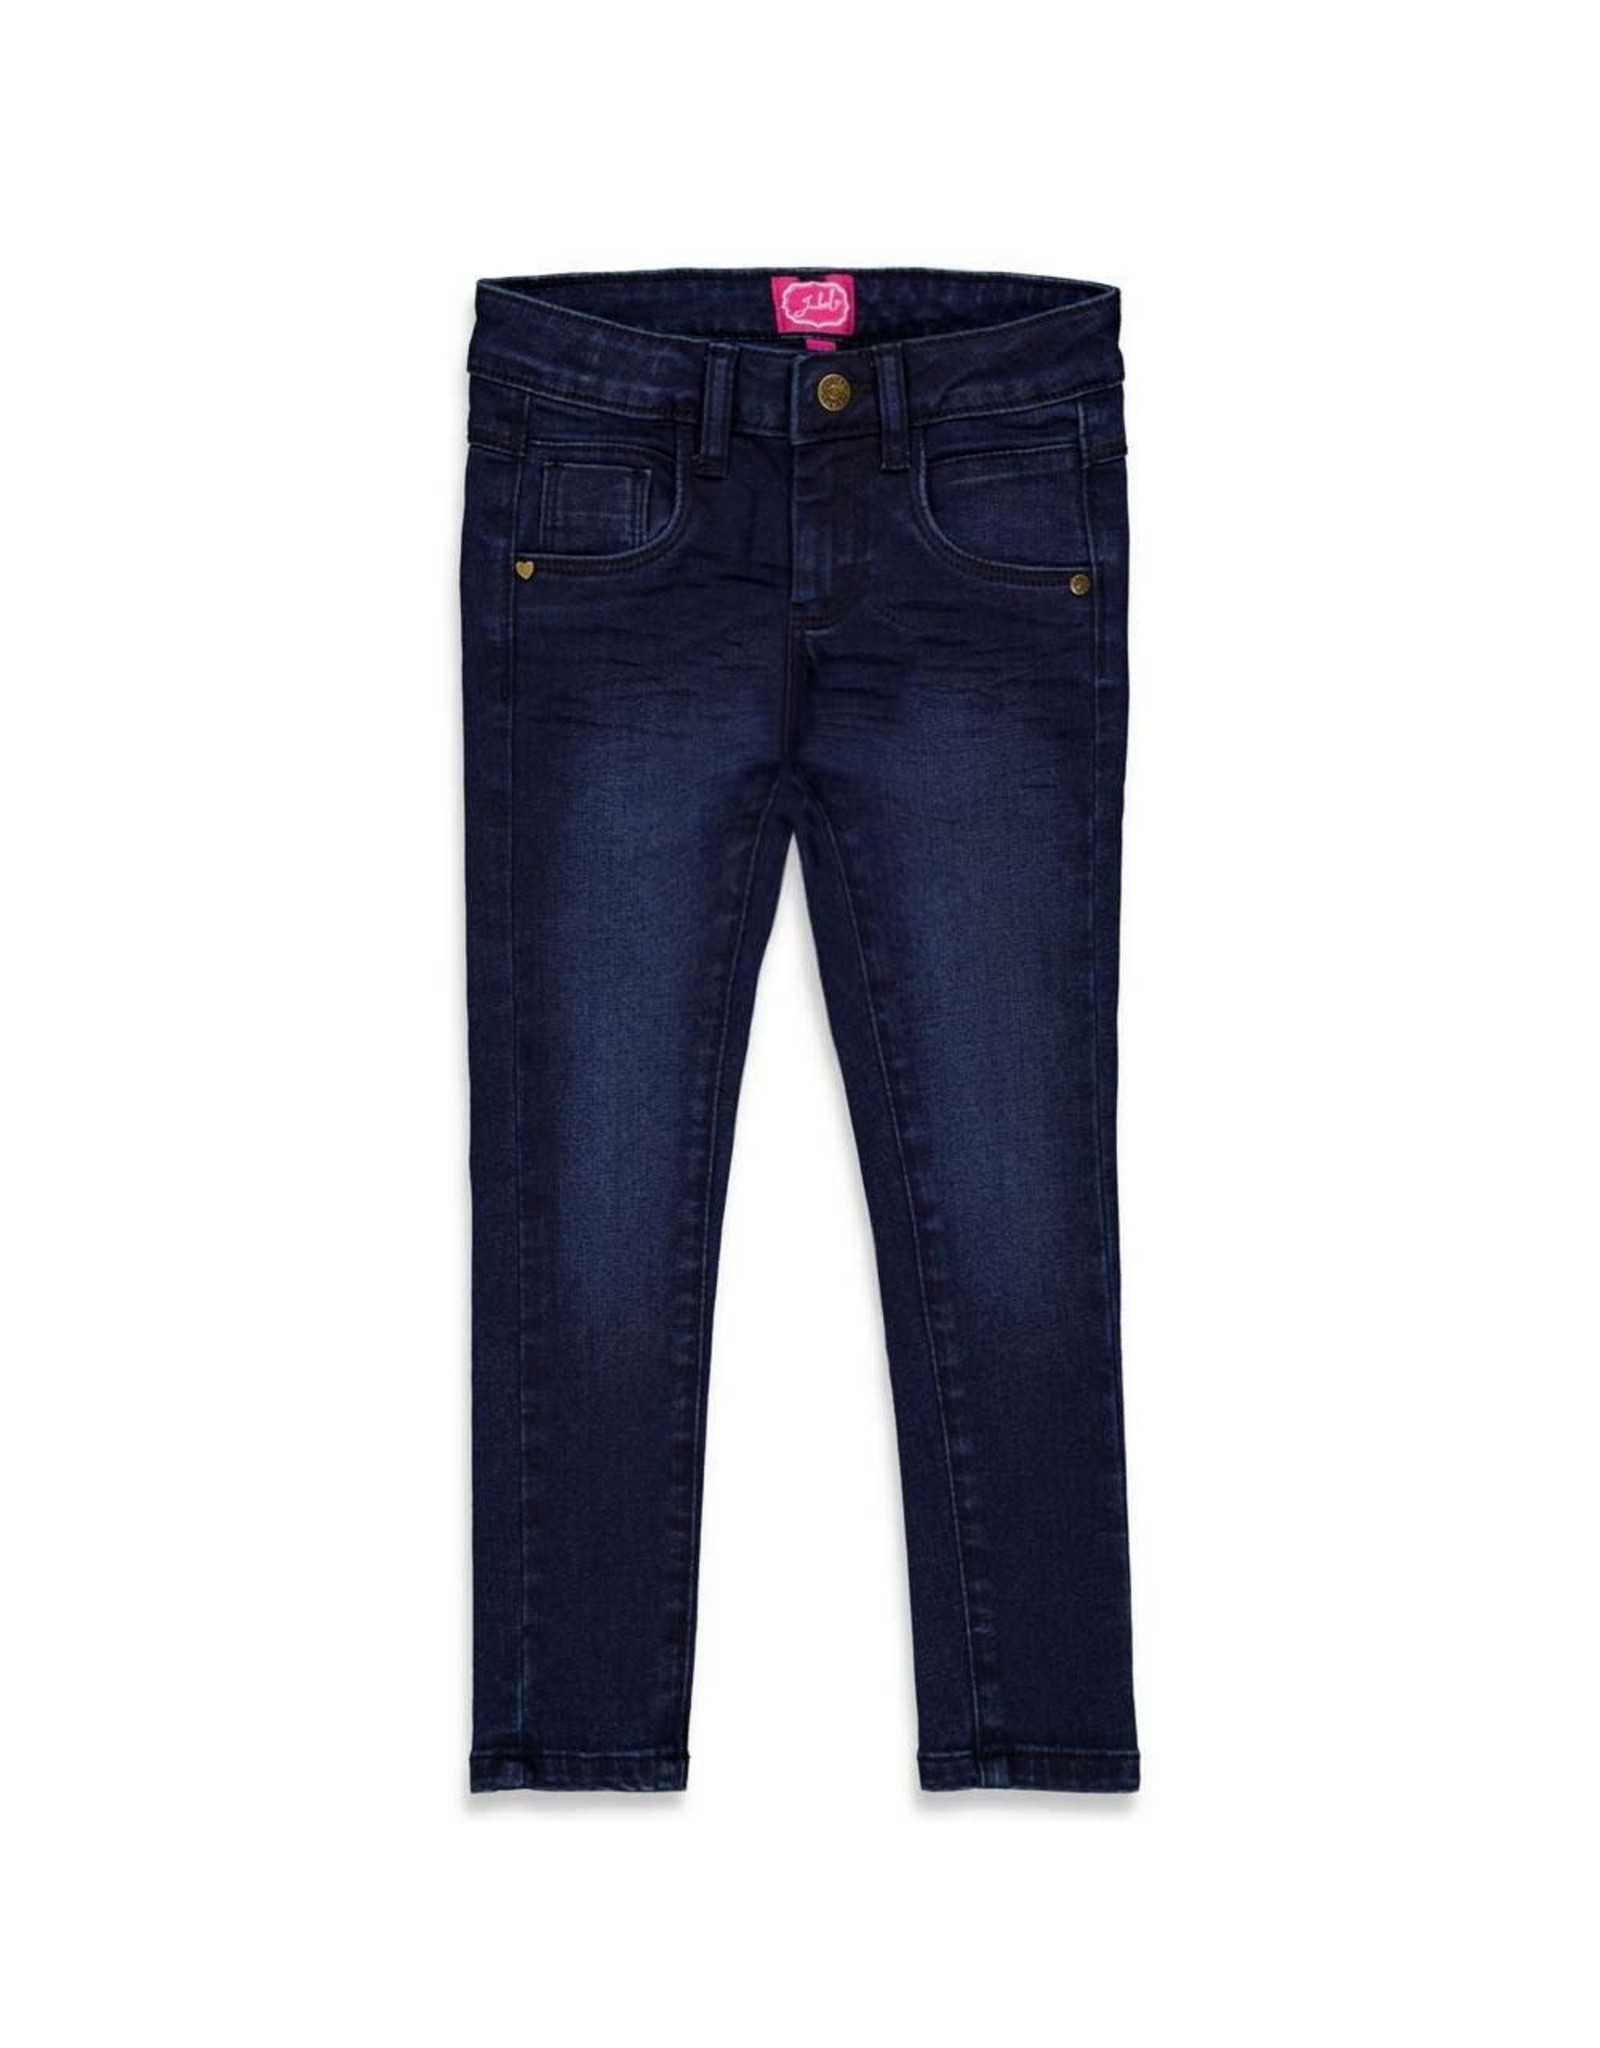 Jubel Skinny jeans - Jubel Denim d.Blauw denim NOS